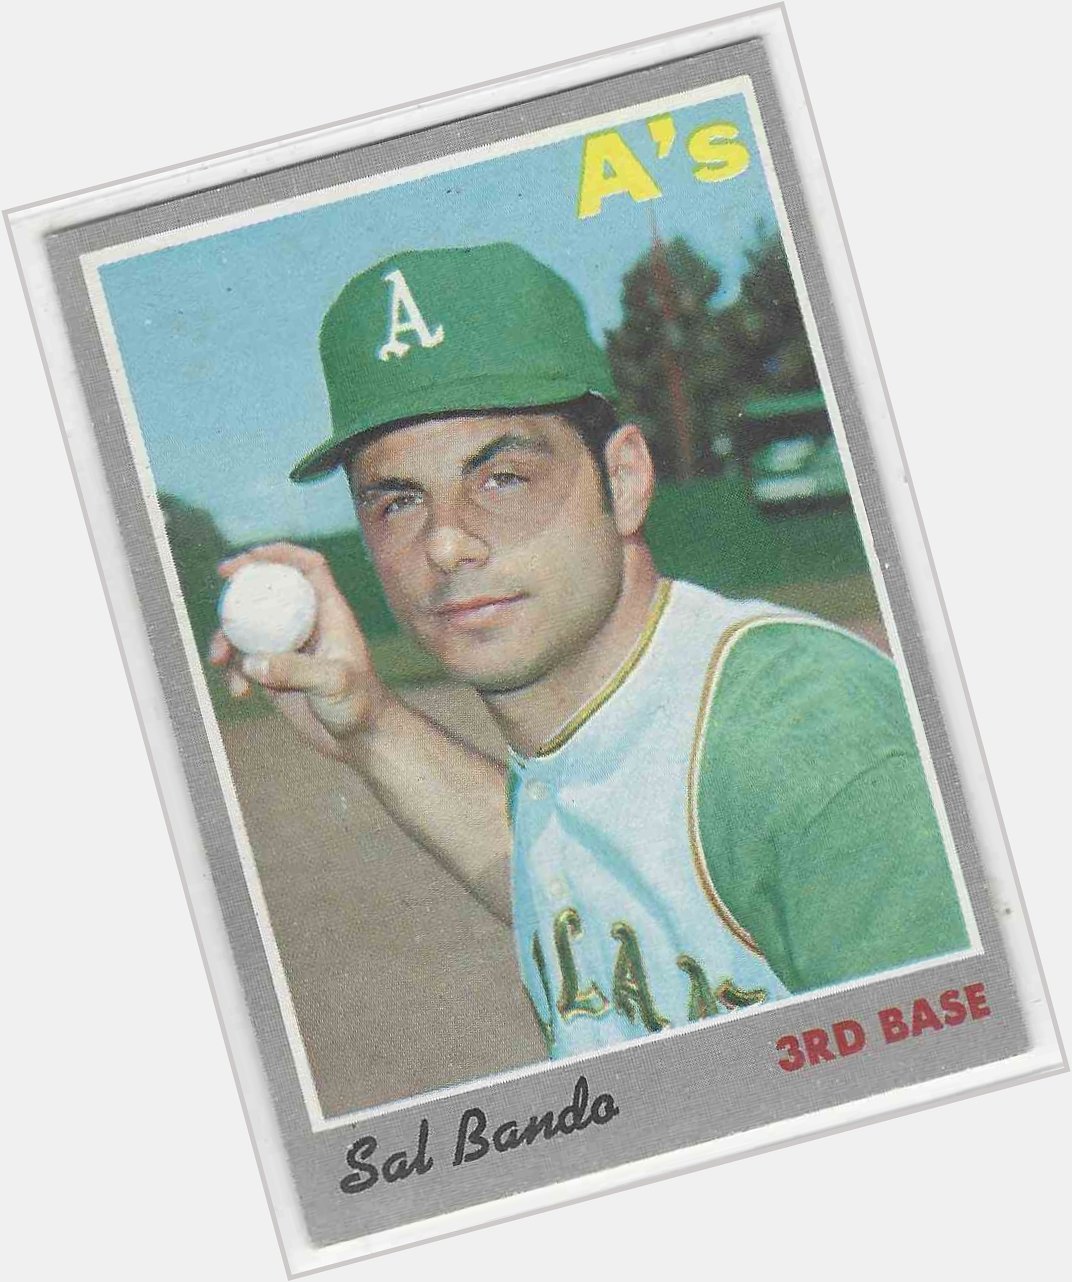 Happy 77th birthday to Sal Bando  